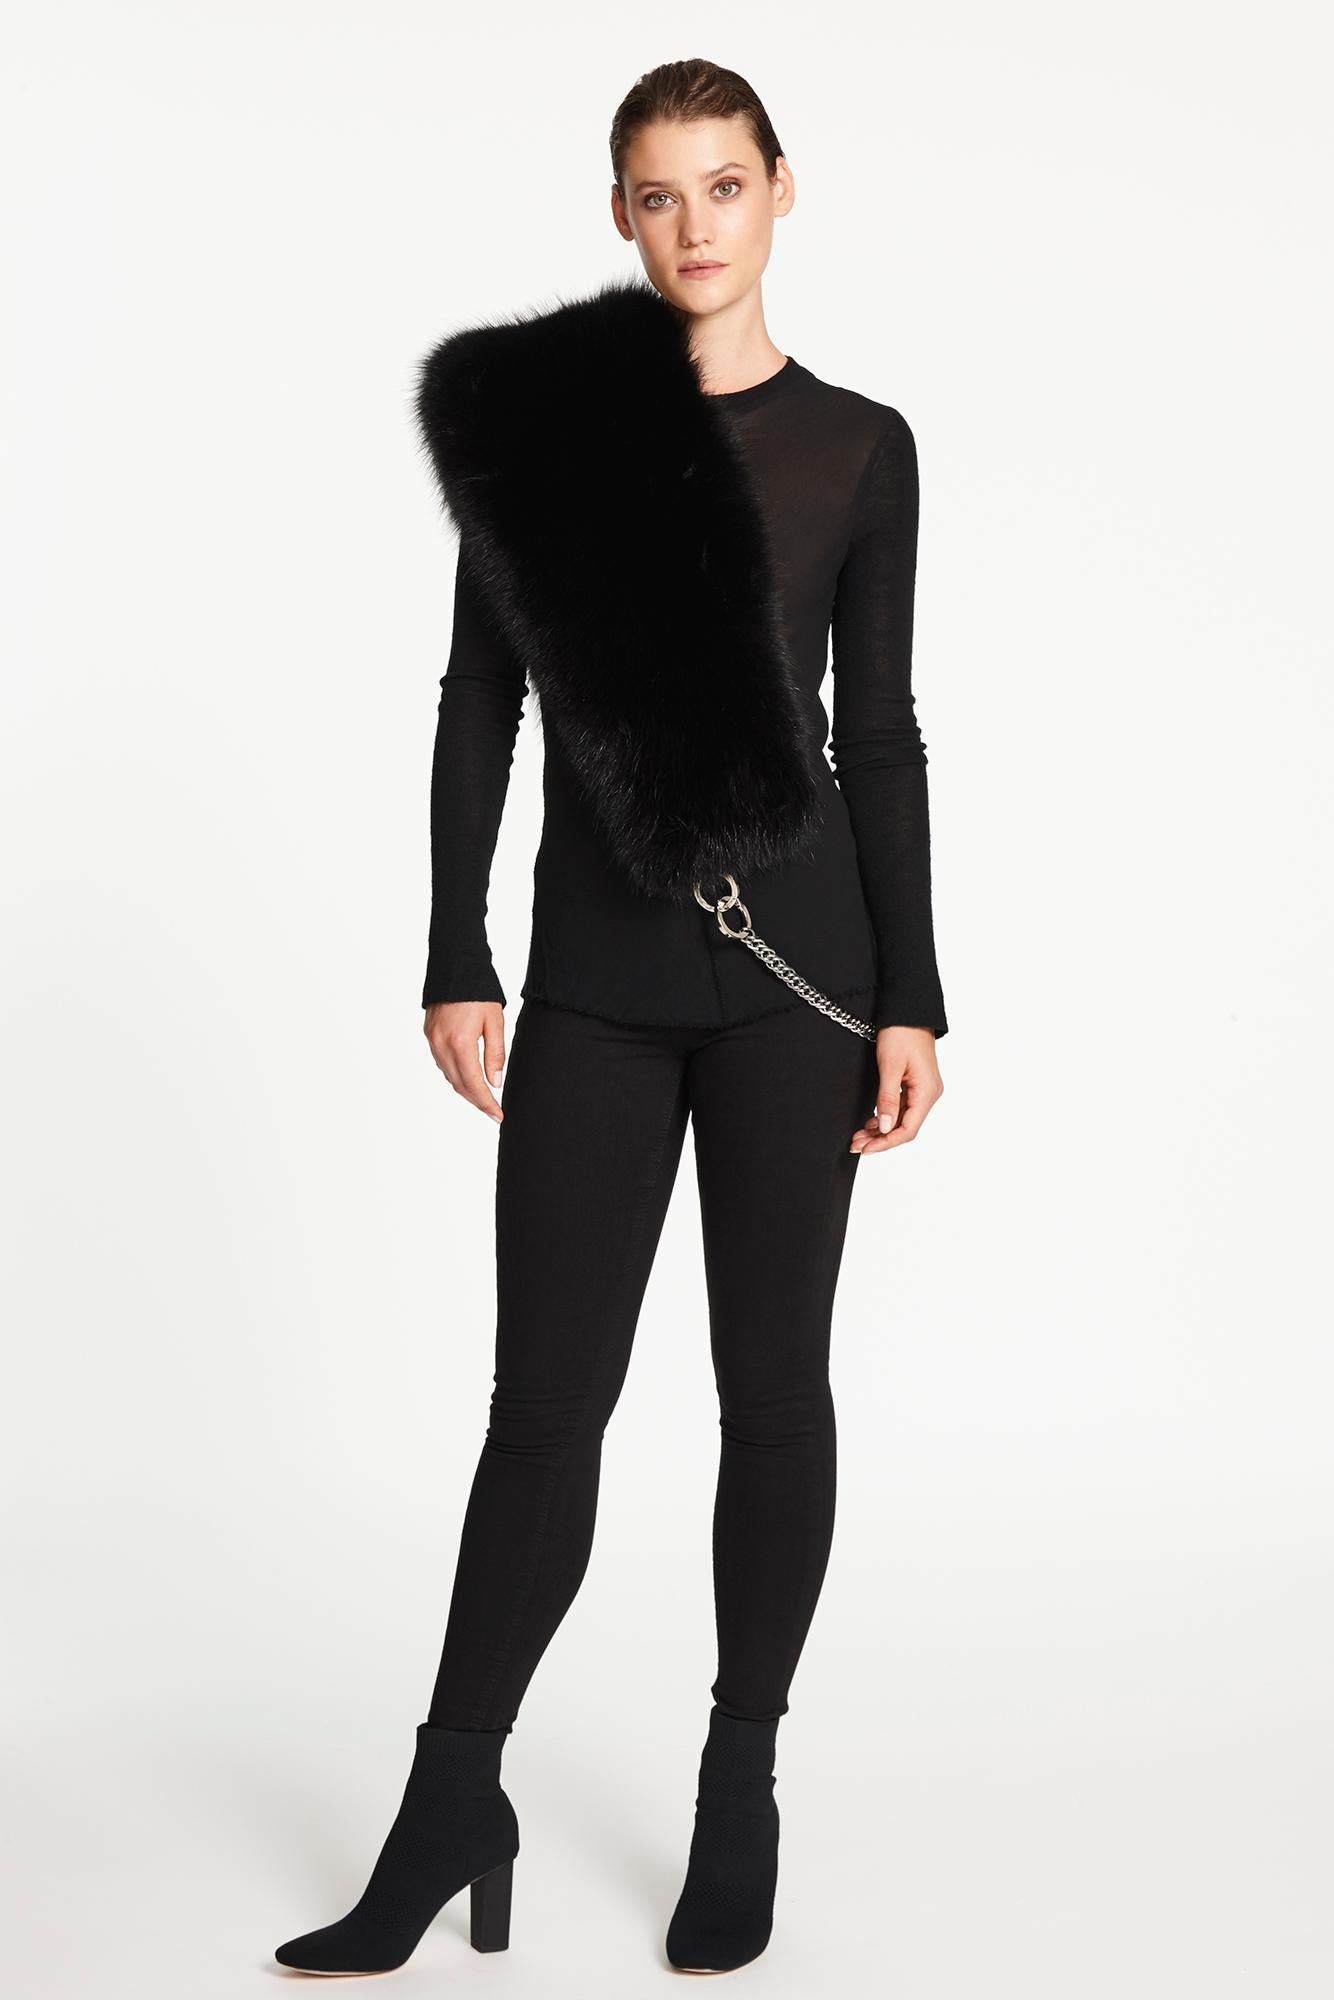 Verheyen London Chained Stole in Black Fox Fur & Chain - Brand New 3